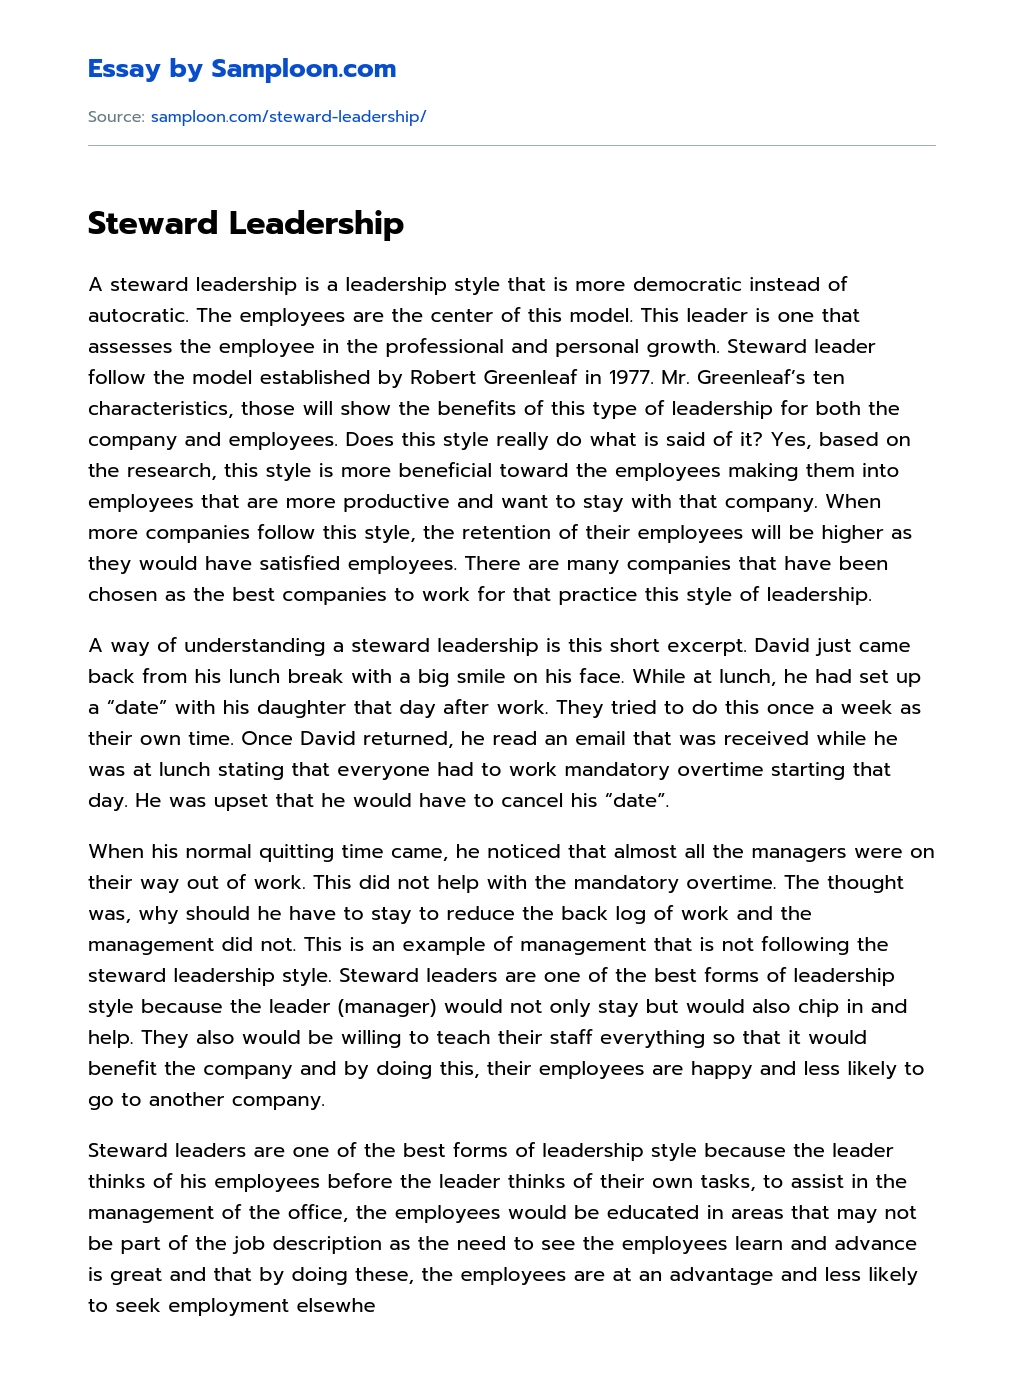 Steward Leadership essay